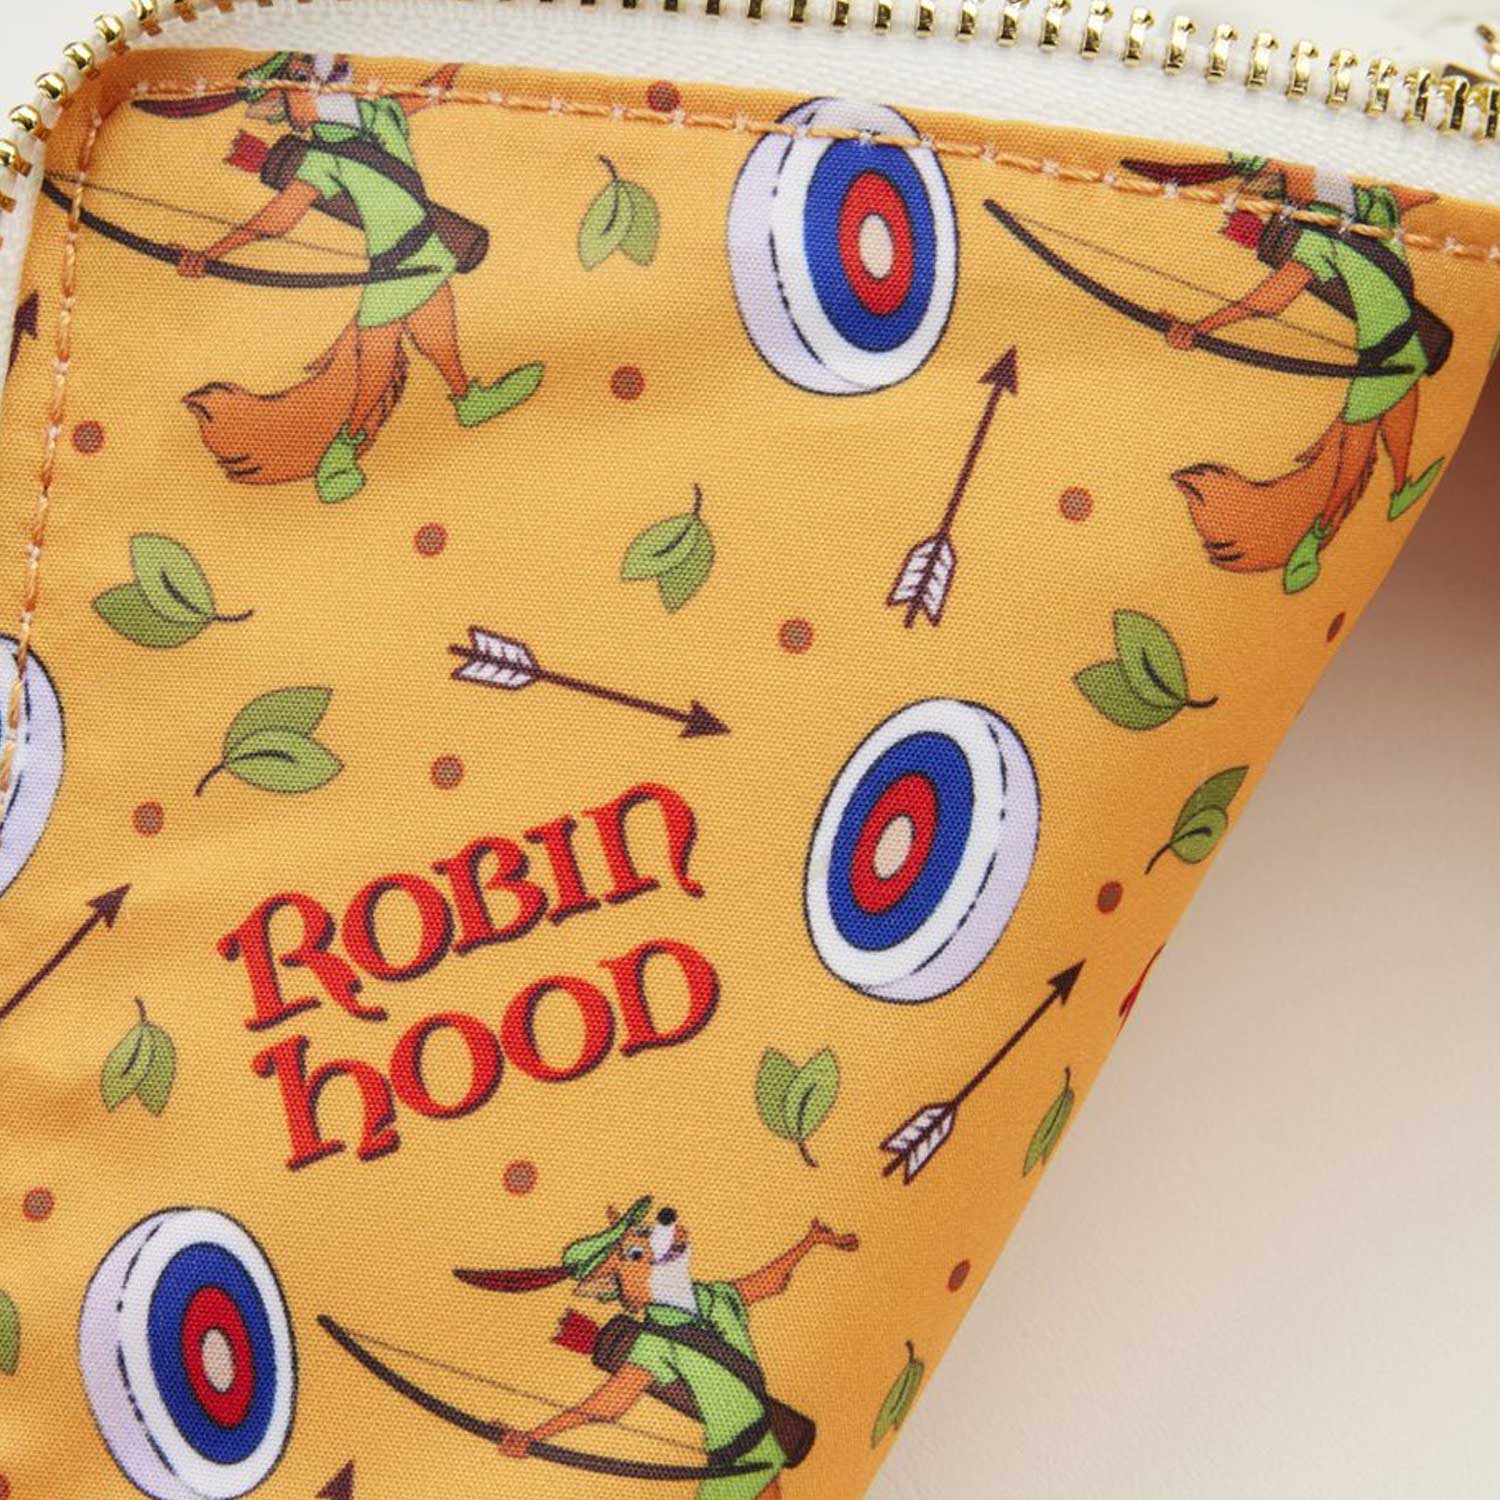 Loungefly x Disney Robin Hood Book Convertible Crossbody Bag - GeekCore